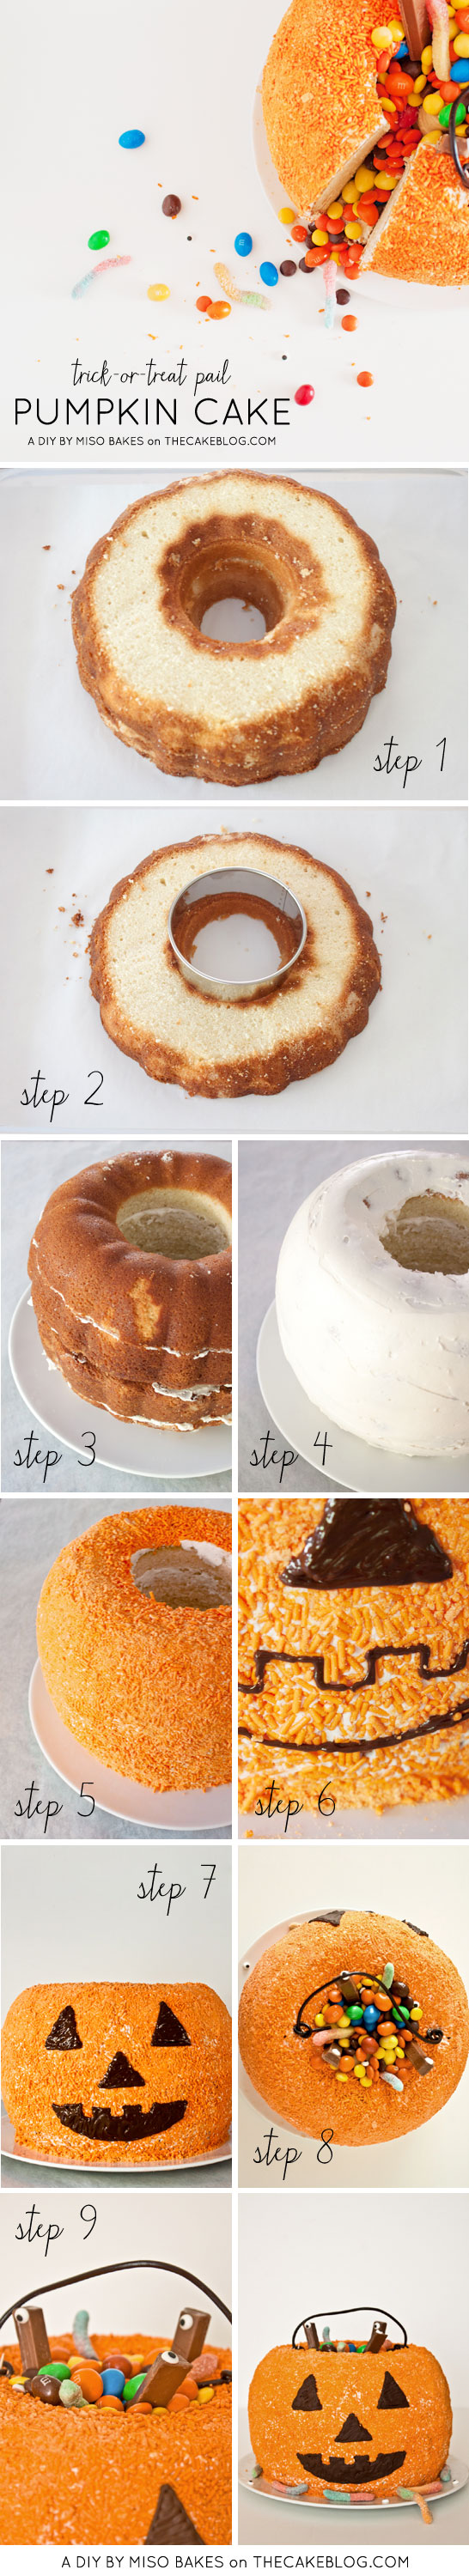 DIY Pumpkin Pinata Cake  |  by Miso Bakes  |  TheCakeBlog.com